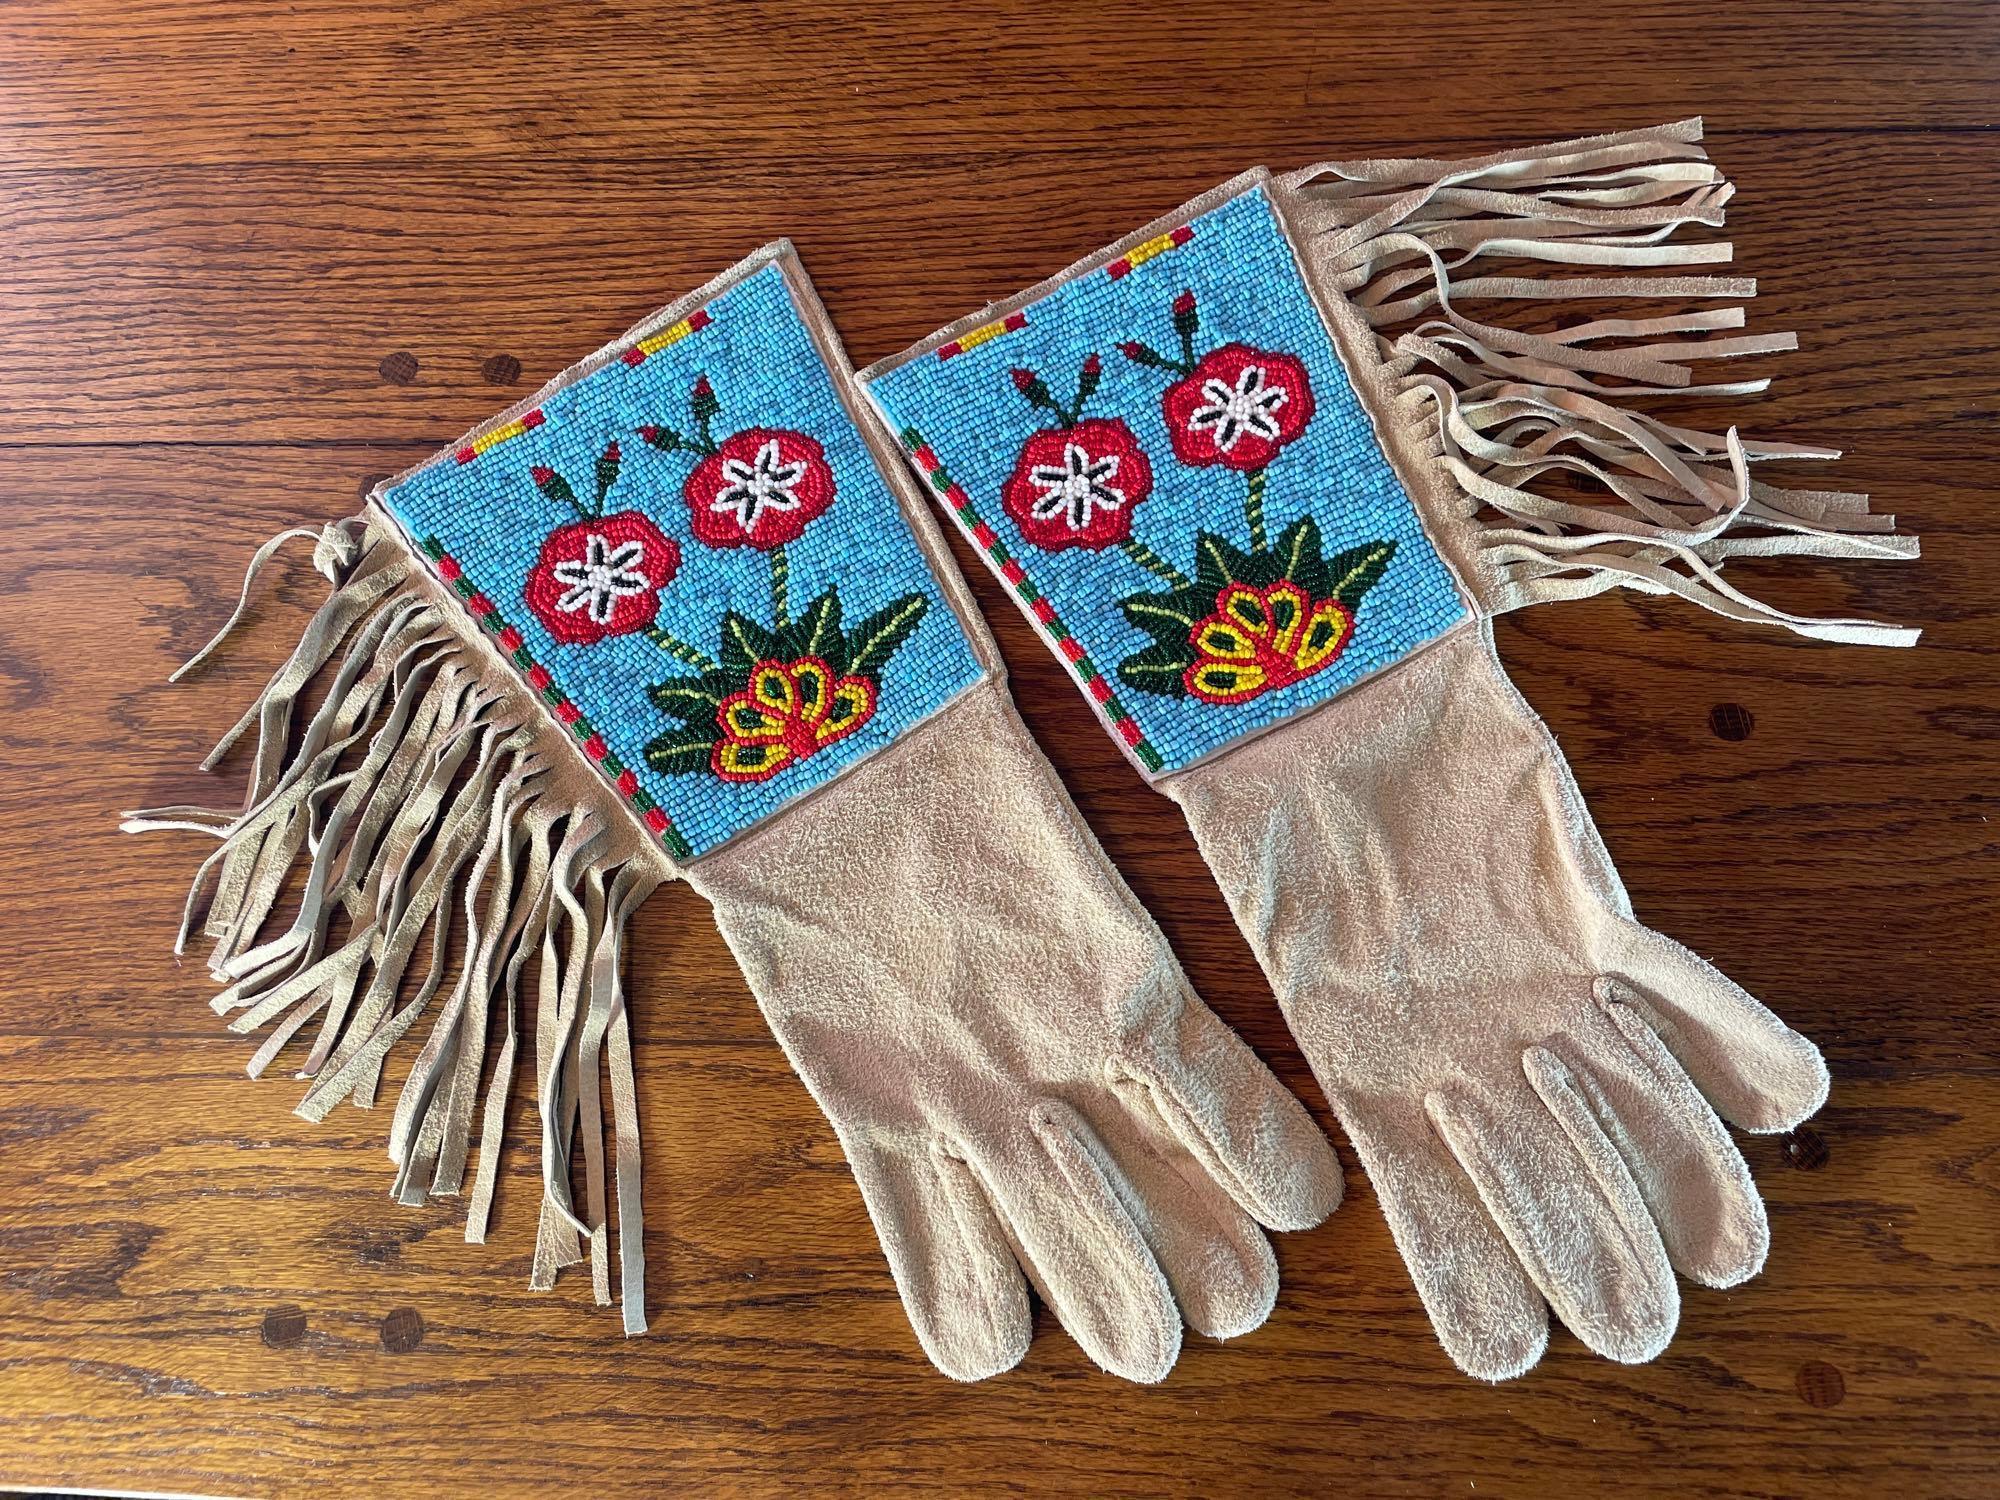 Native American Beaded Gloves